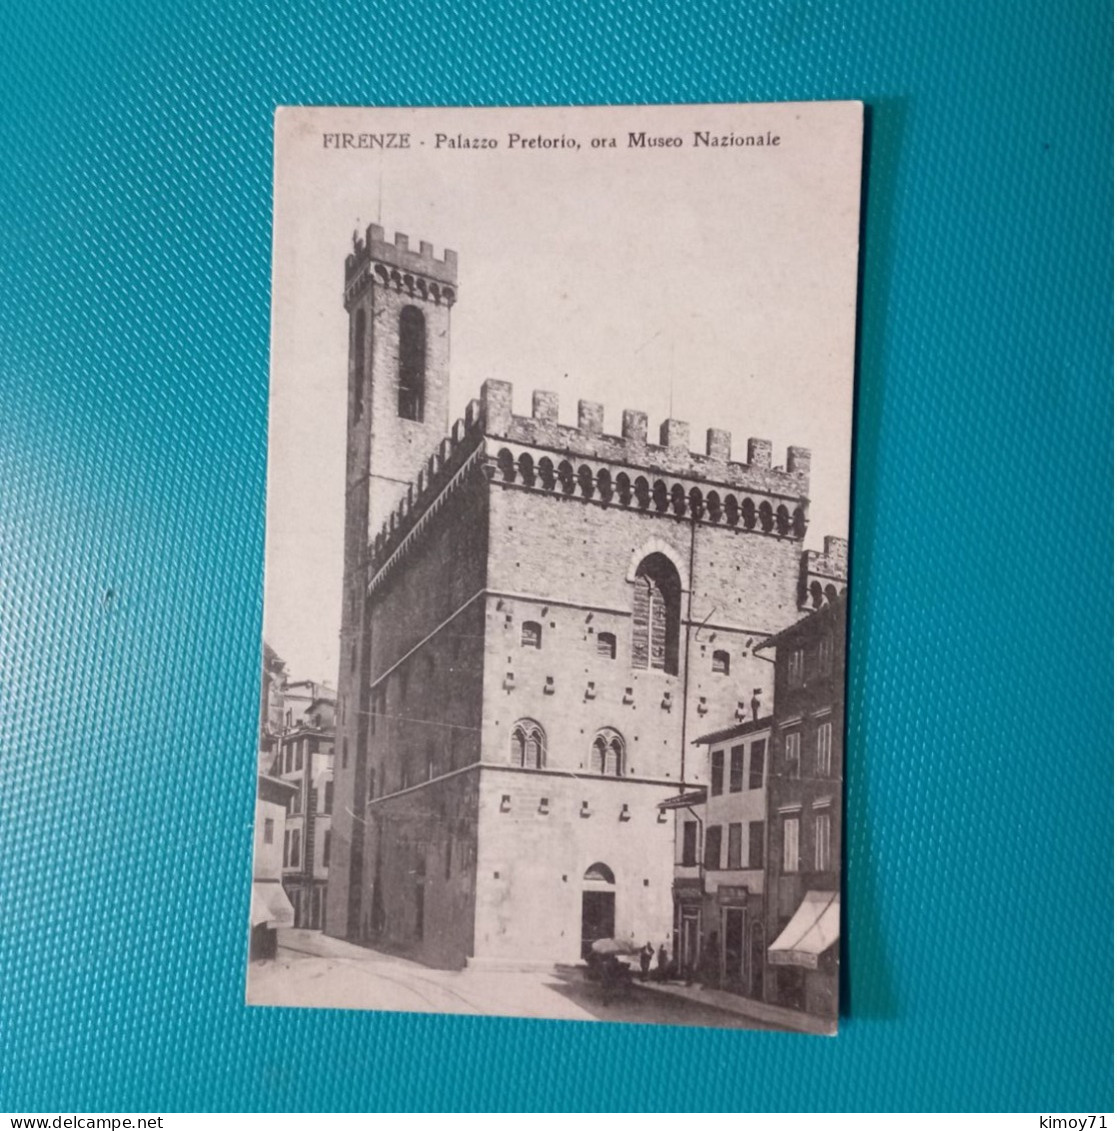 Cartolina Firenze - Palazzo Pretorio, Ora Museo Nazionale. - Firenze (Florence)